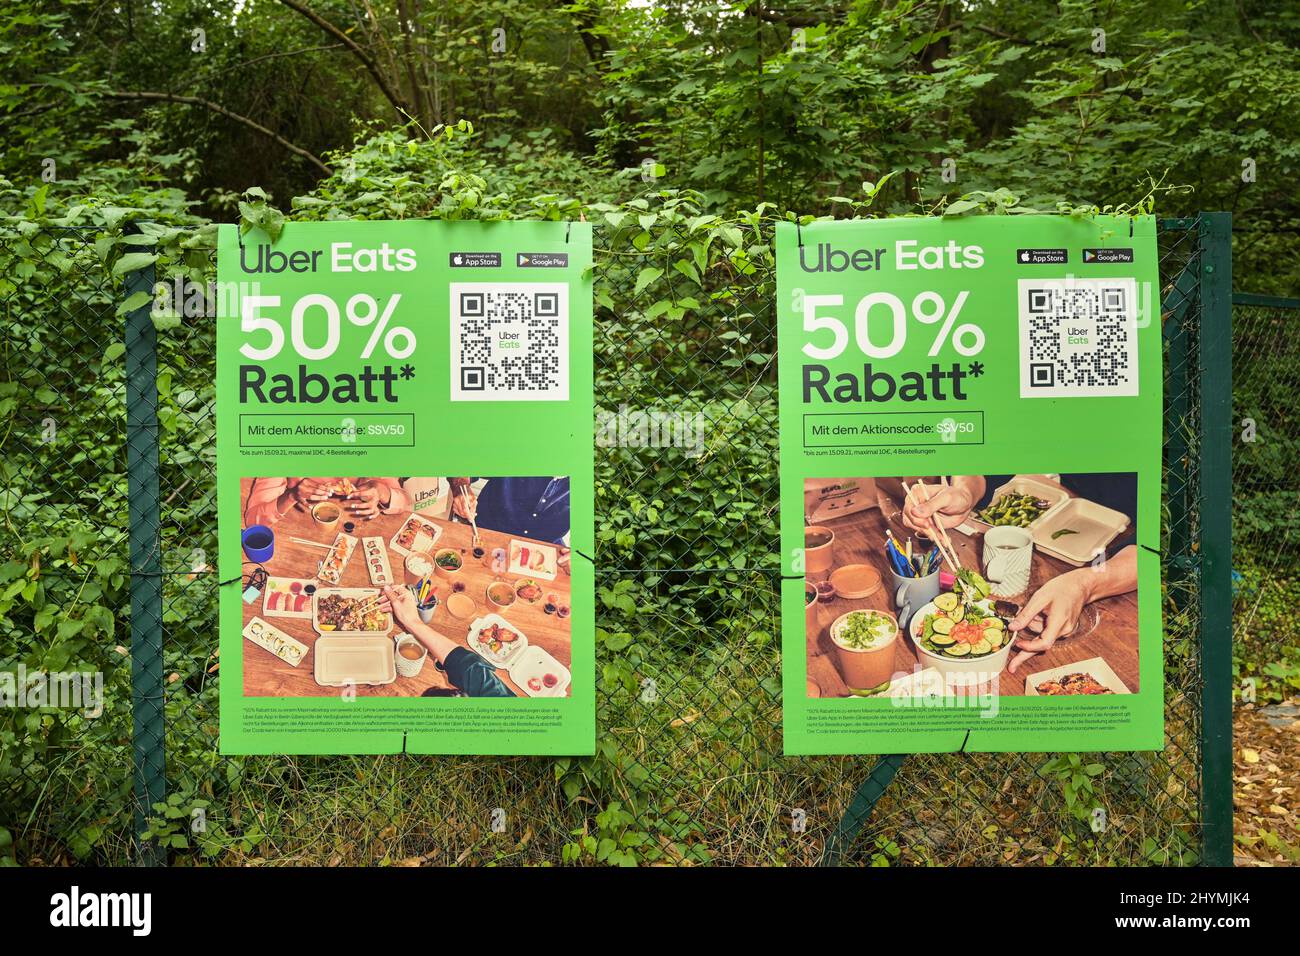 Poster Uber Eats discount, Berlin, Germany Stock Photo